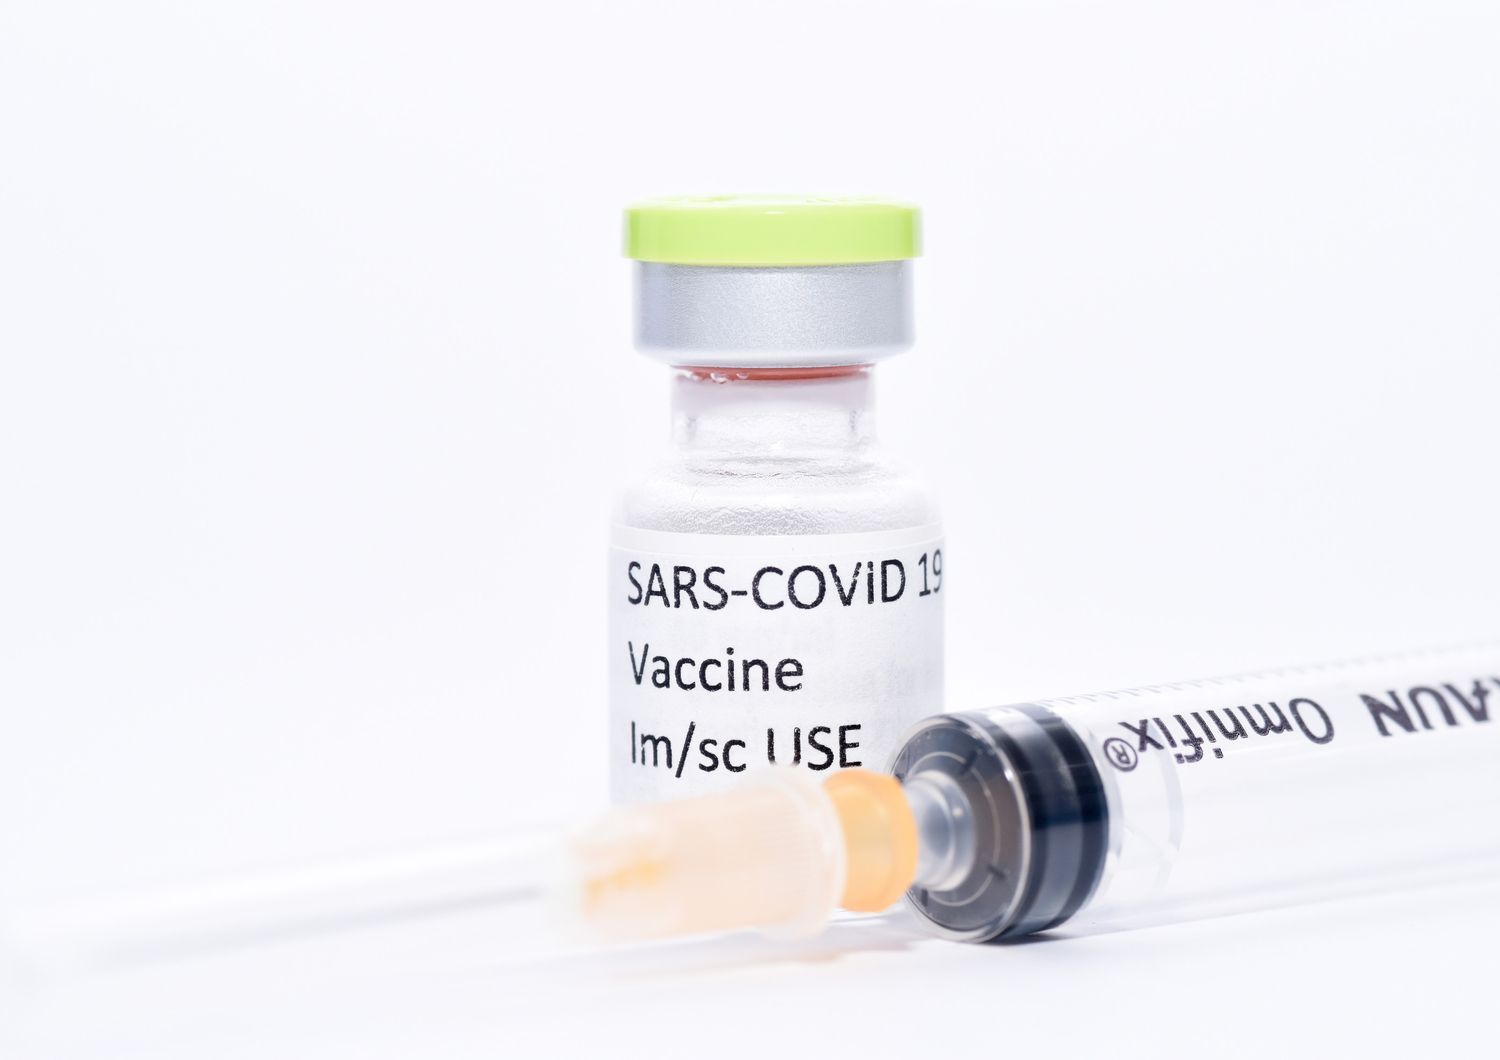 Vaccino anti Covid e siringa monouso